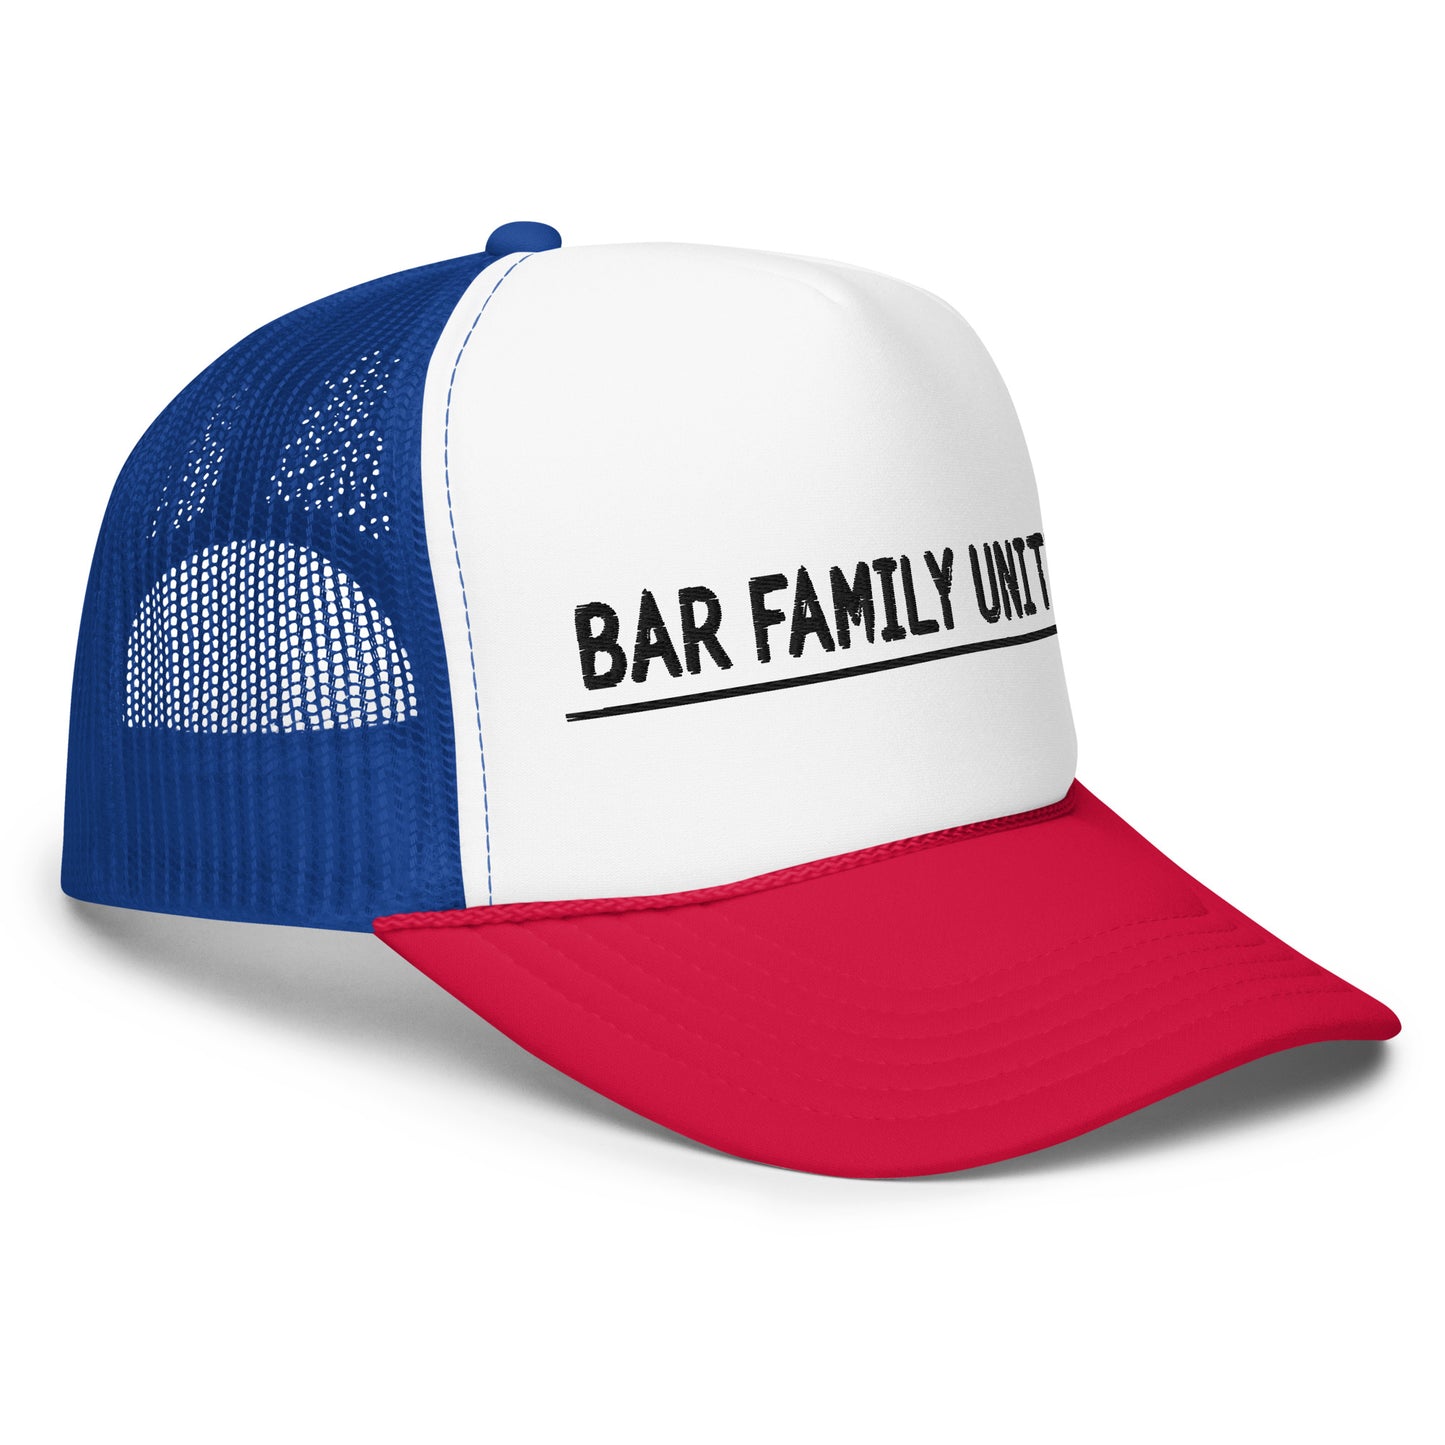 BAR family united Foam trucker hat